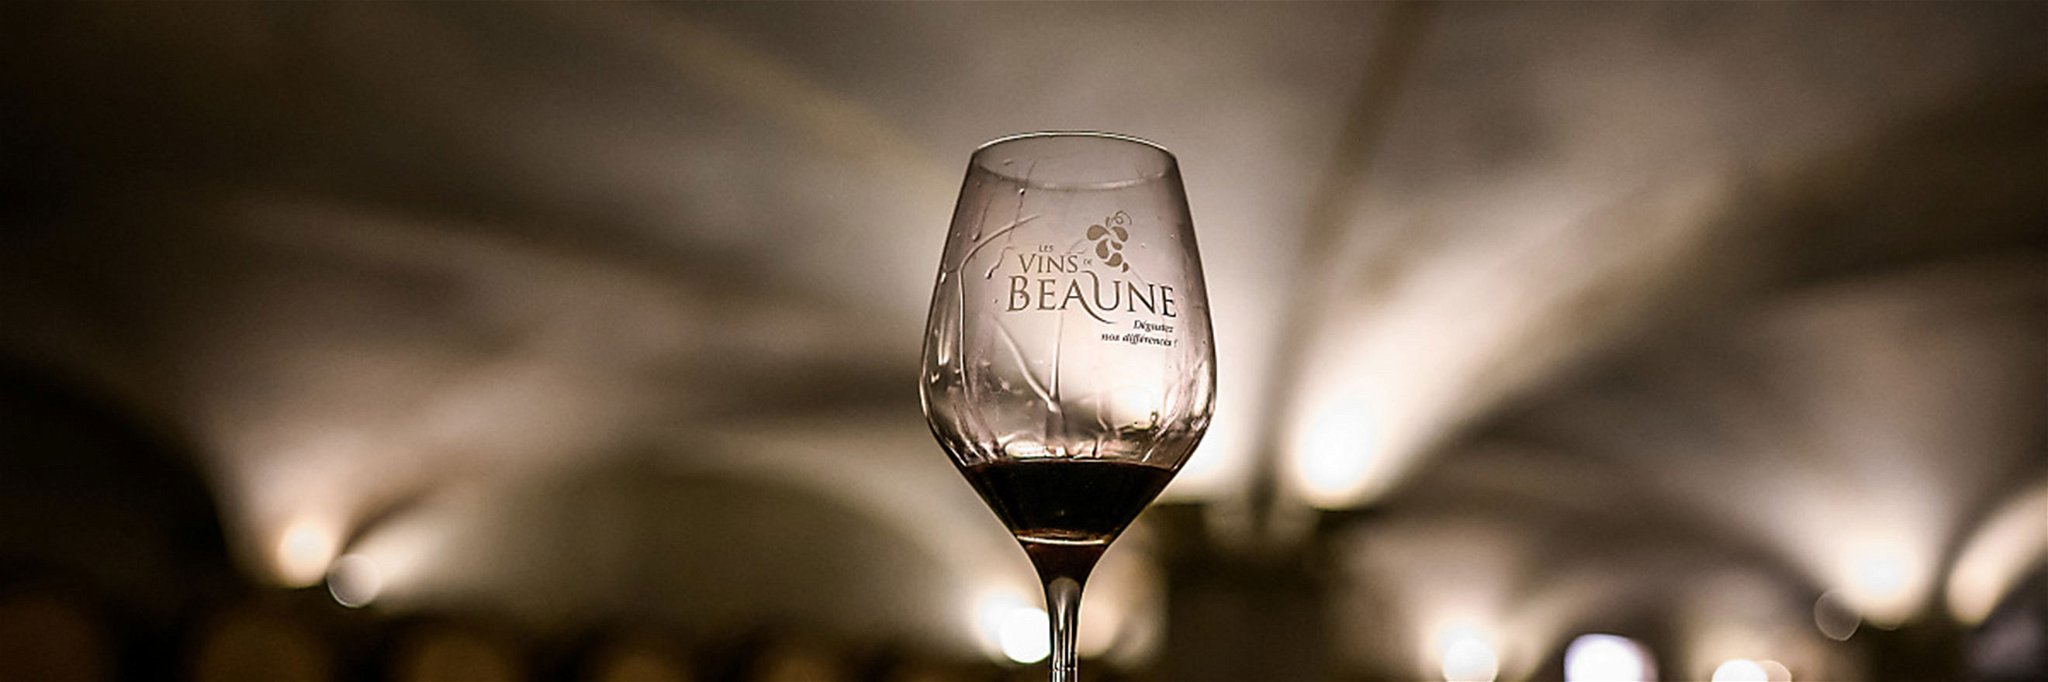 Hospices de Beaune wine auction has been held since&nbsp;1859.